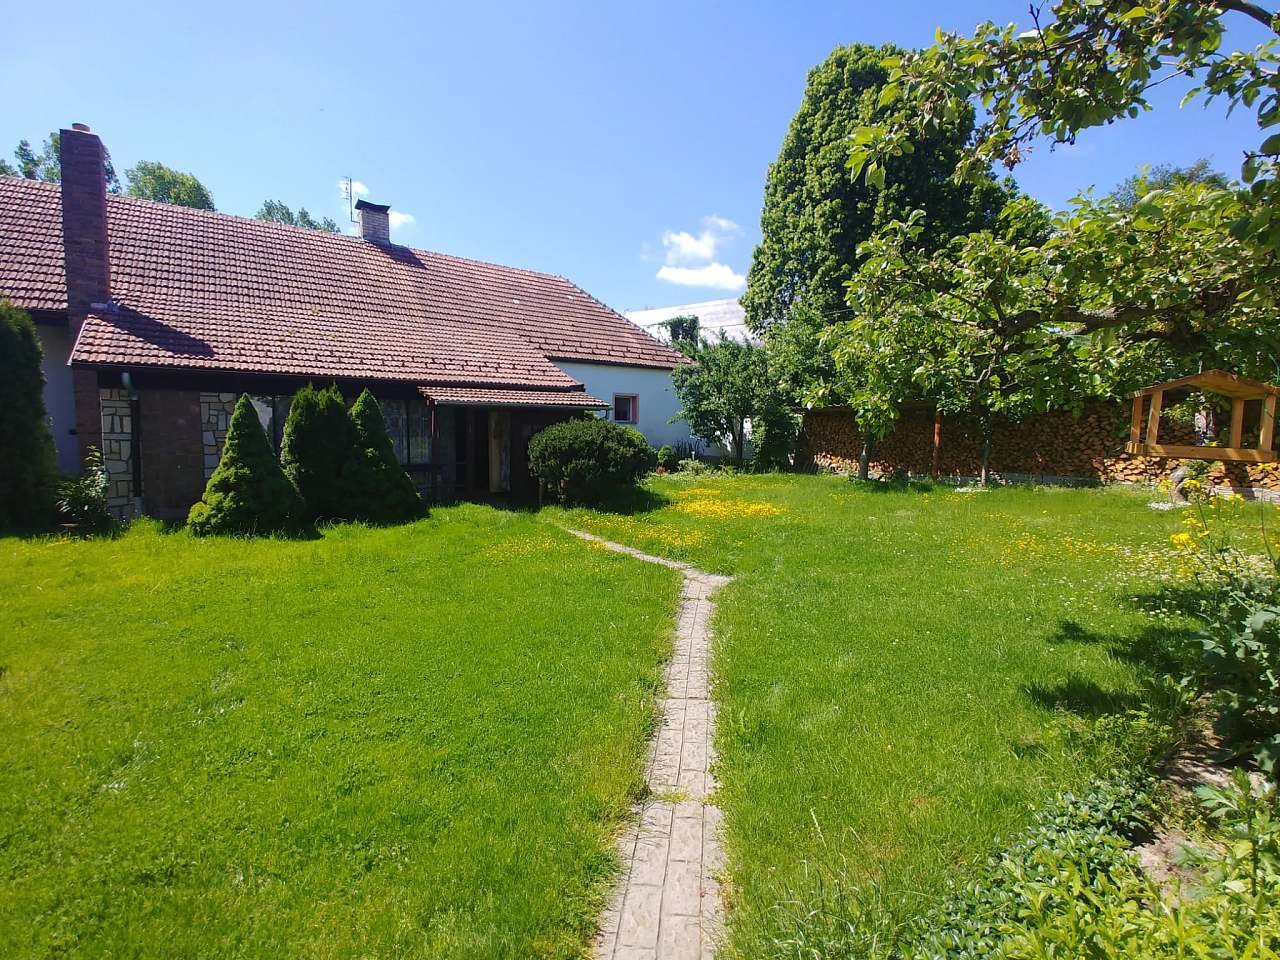 Cottage in Dašov near Třebíč - View from the yard